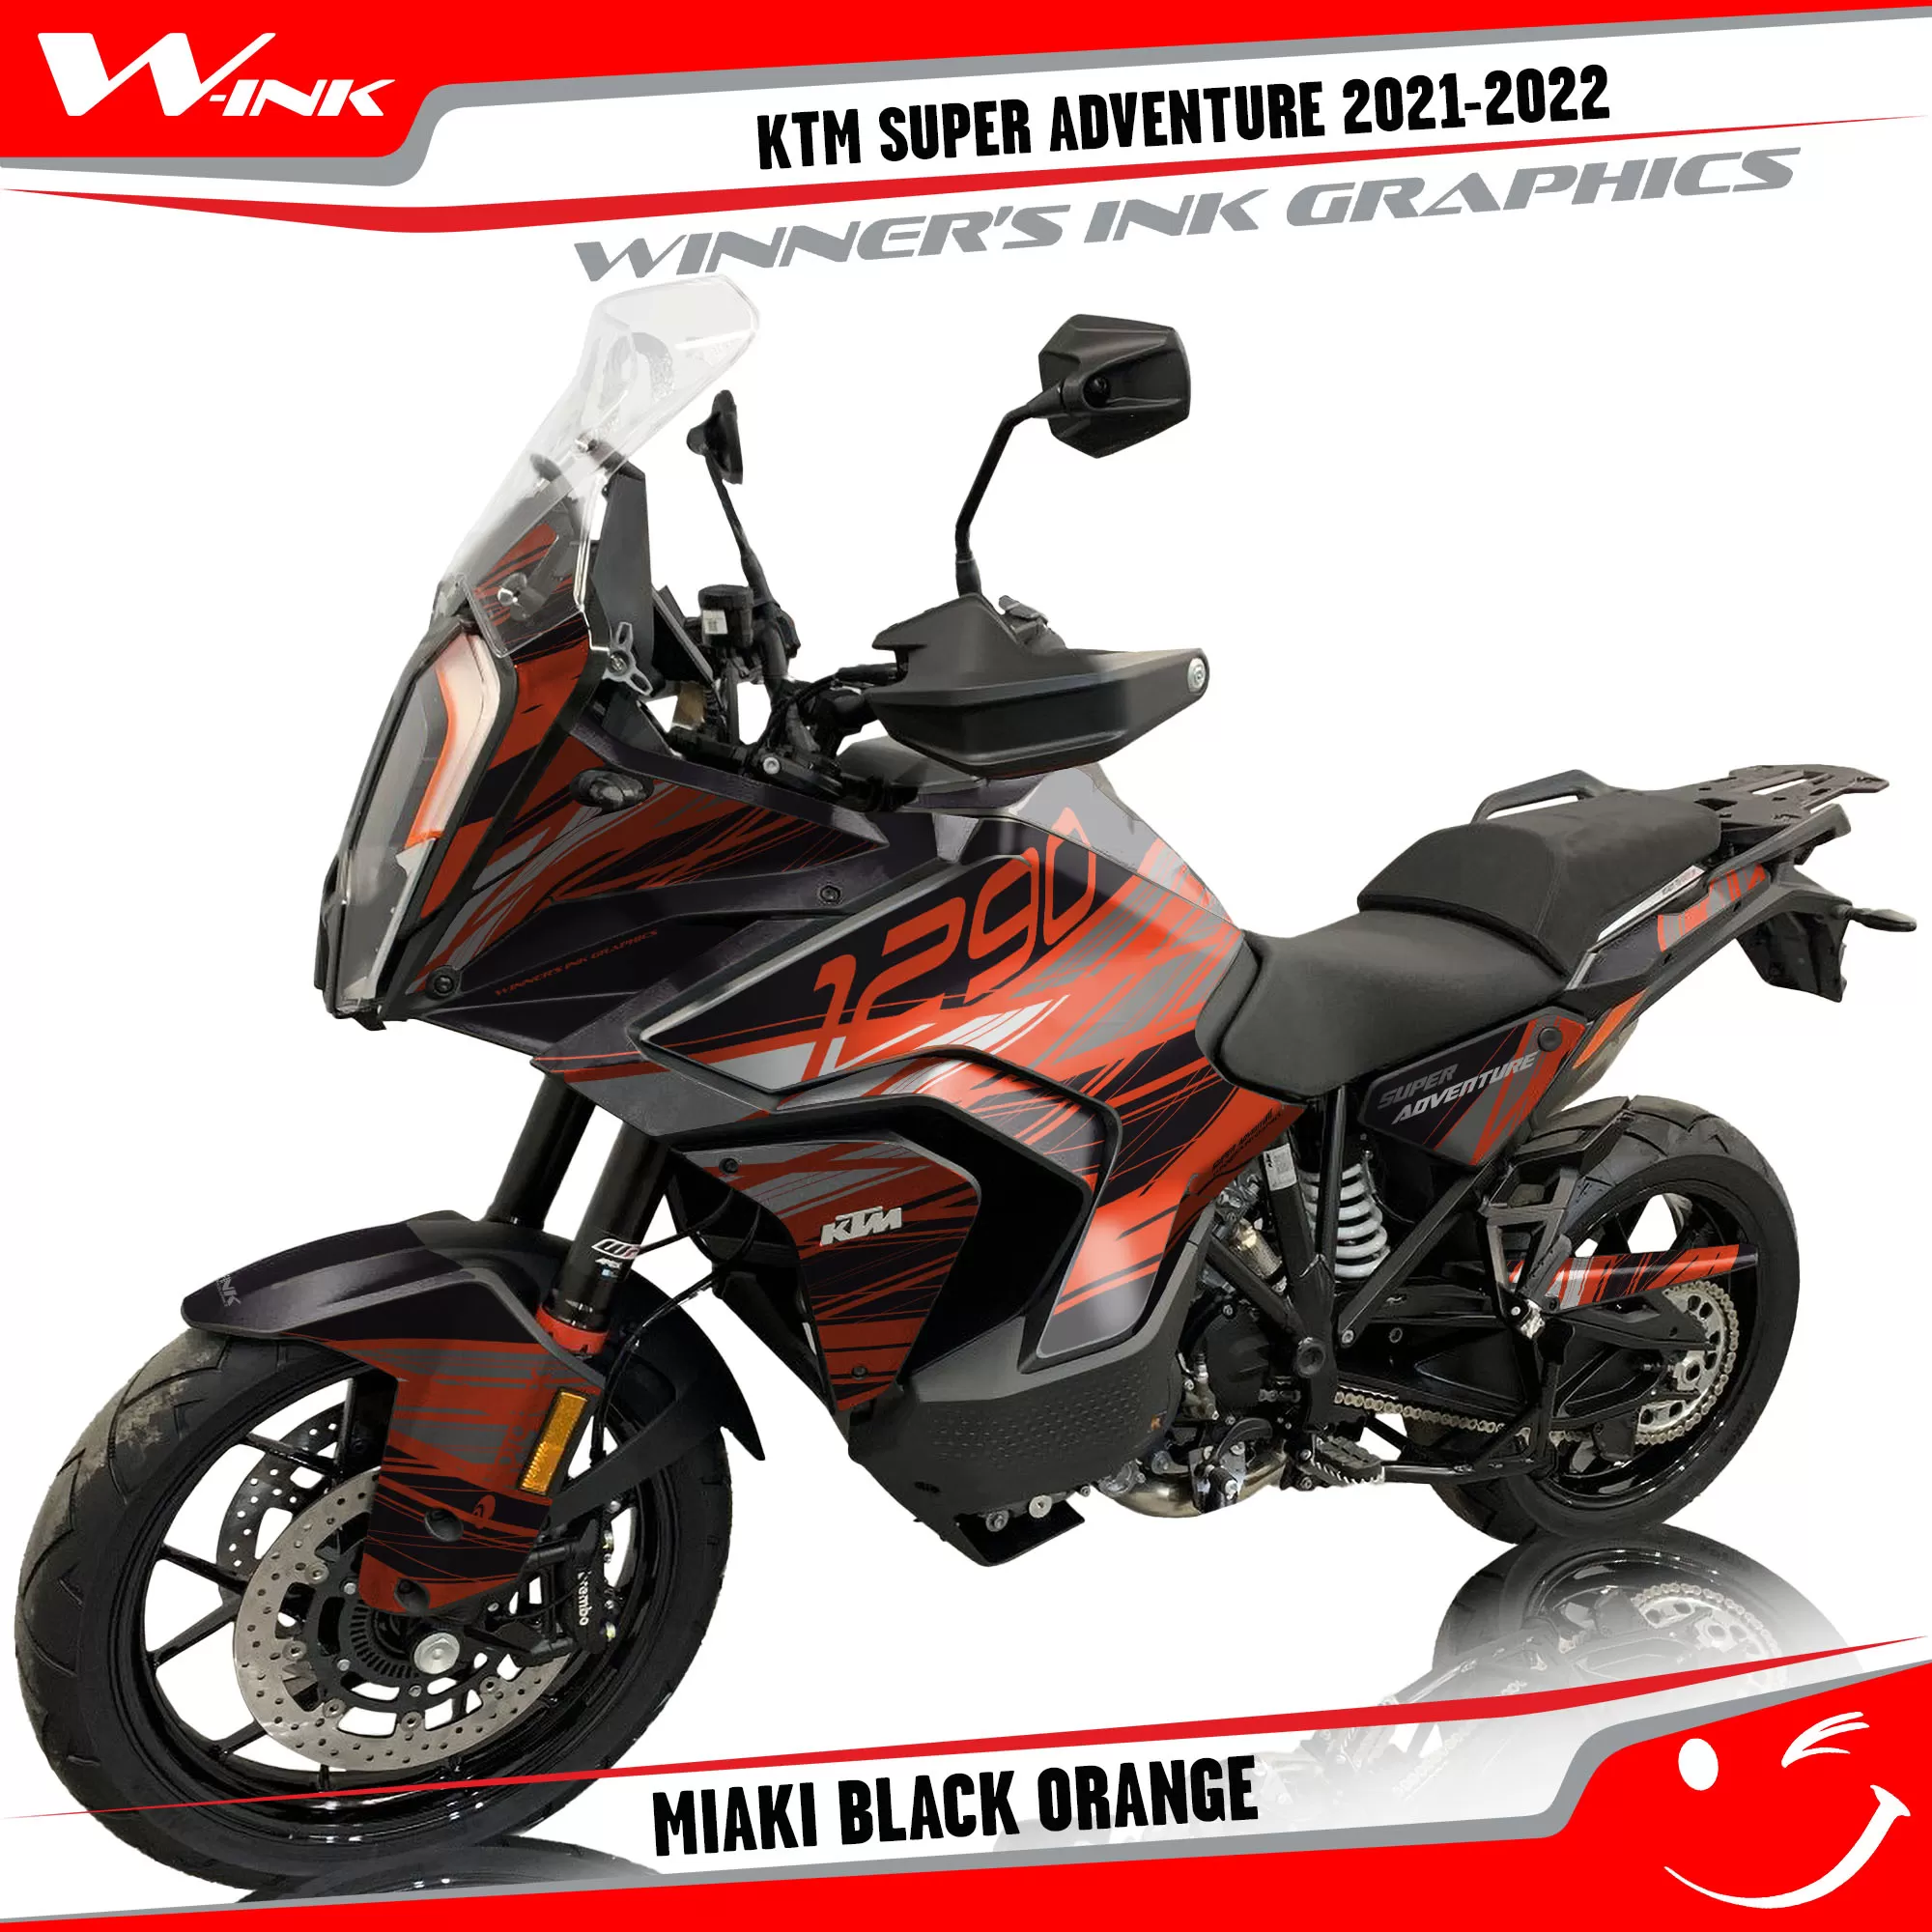 KTM-Super-Adventure-S-2021-2022-graphics-kit-and-decals-with-designs-Miaki-Black-Orange